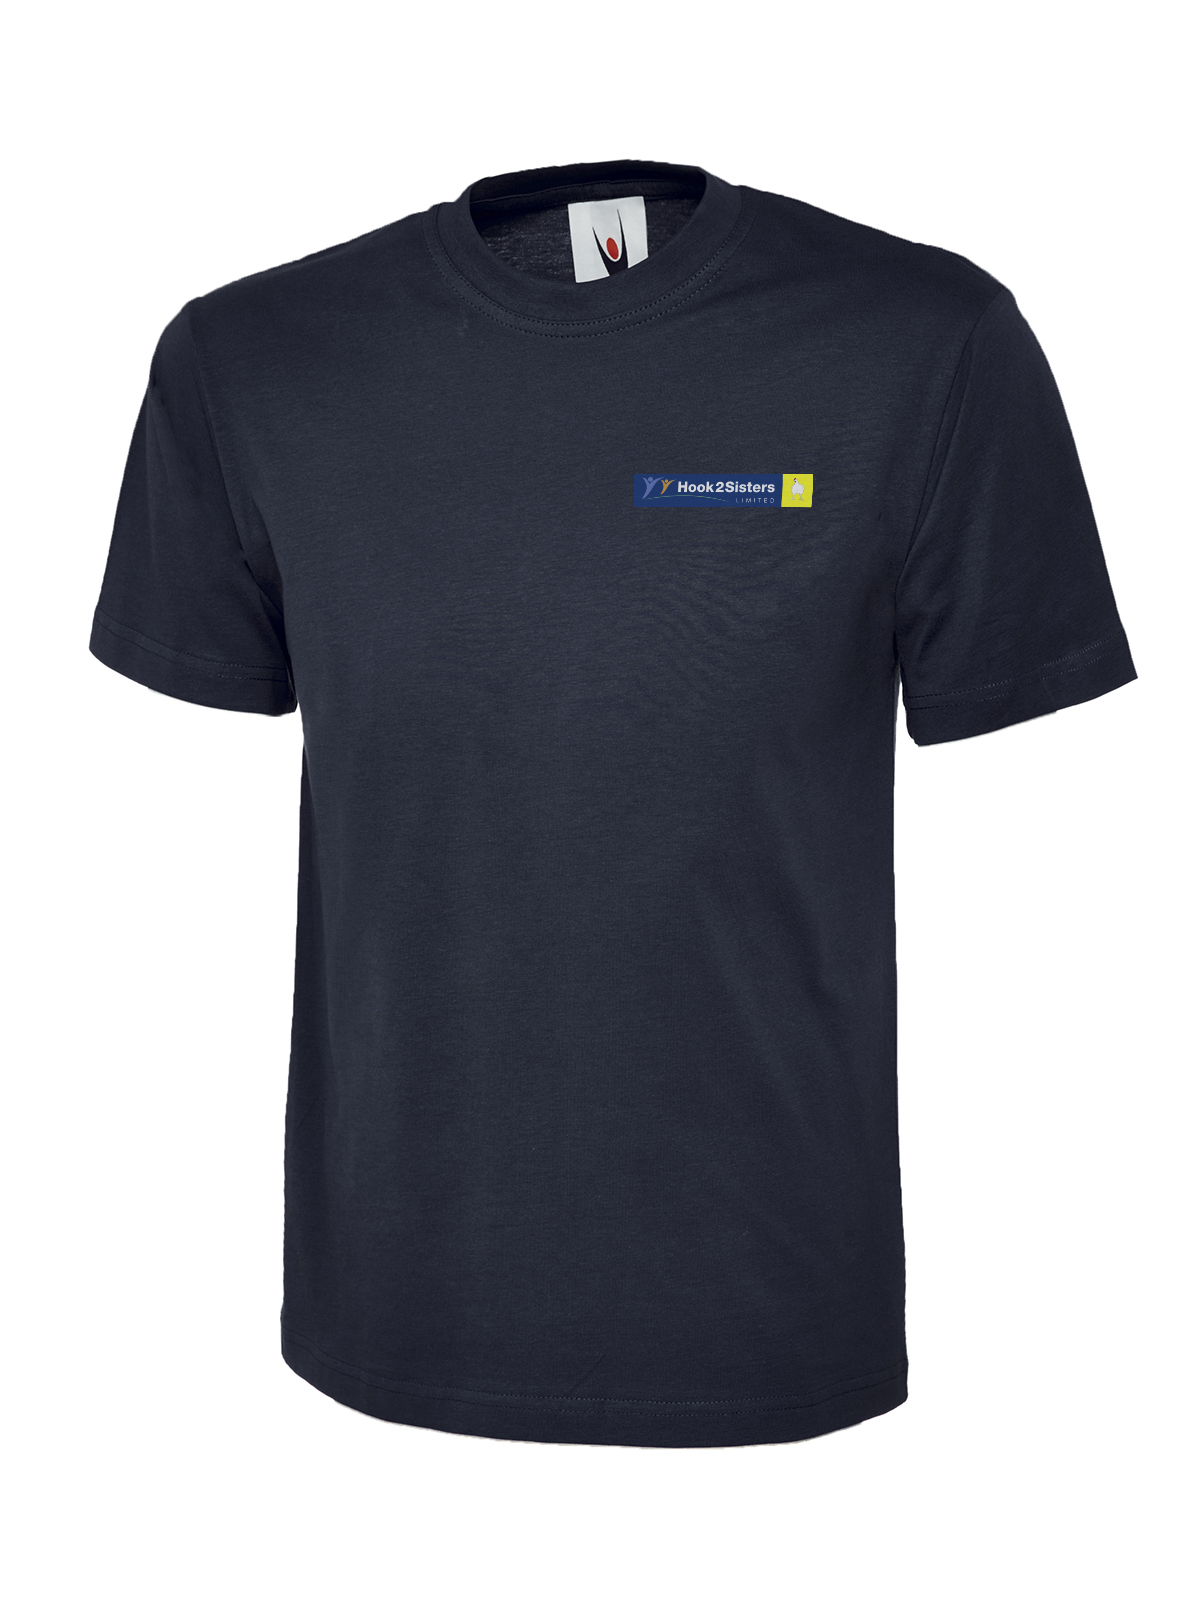 Hook2Sisters Ltd - T-Shirt, Navy - Size Small